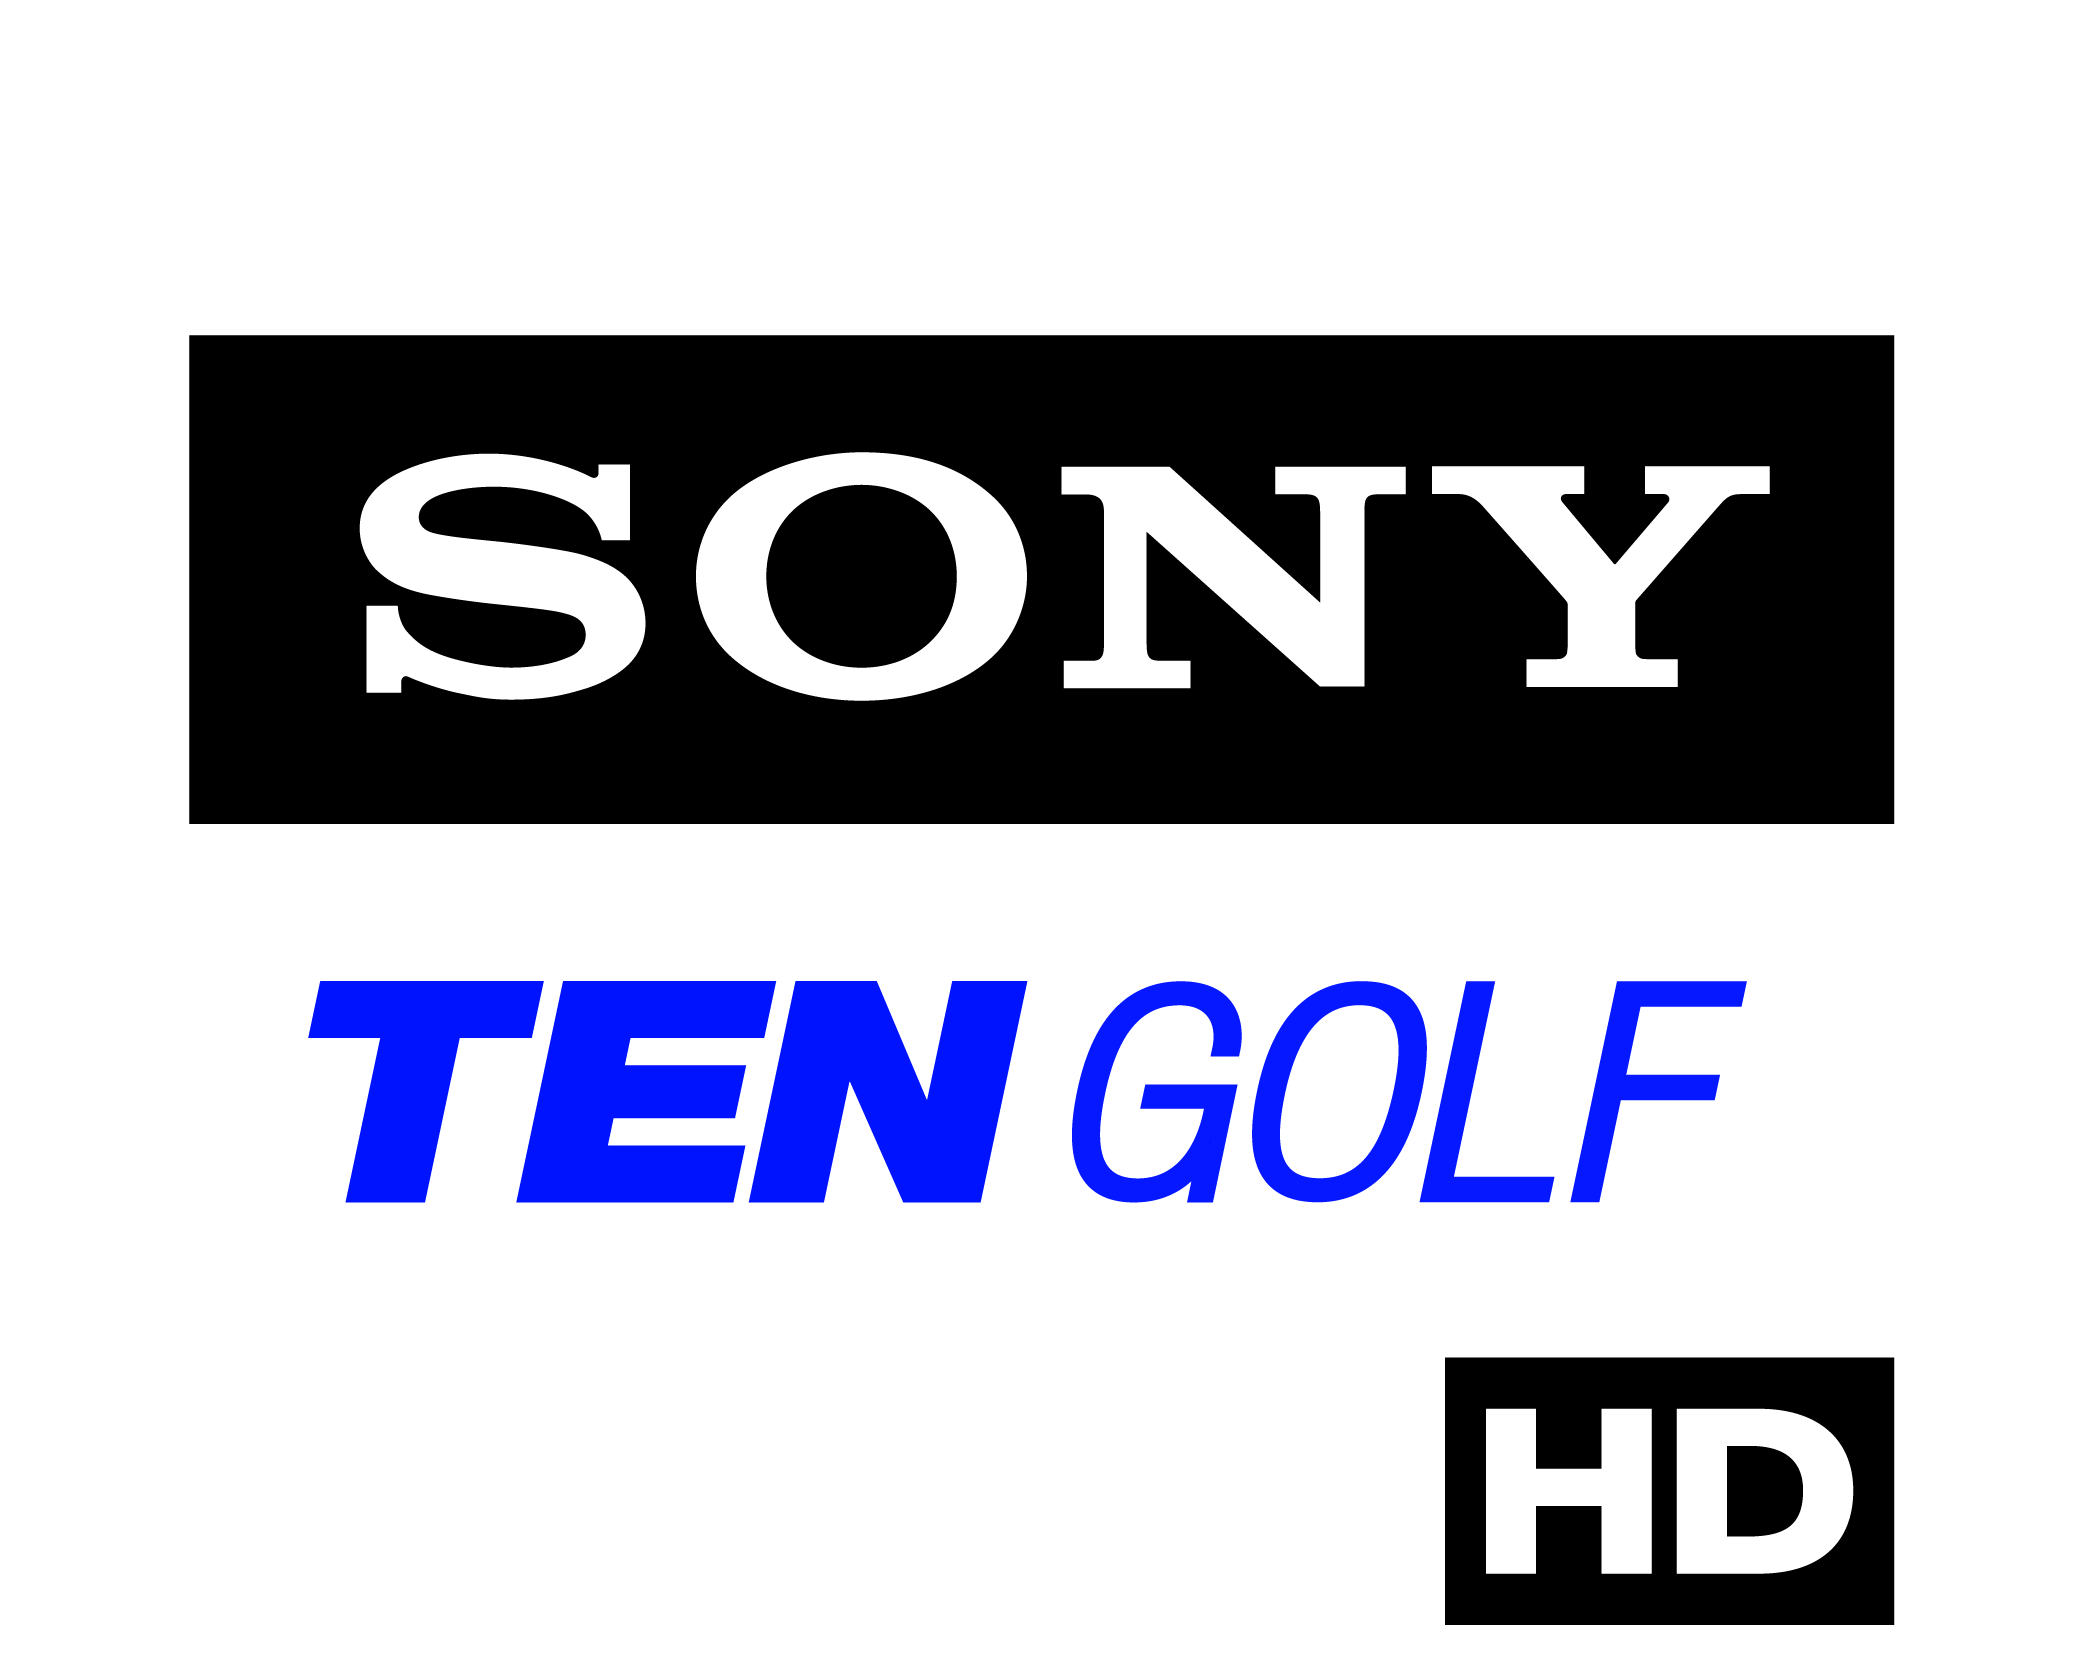 Tour Partners - Golf, Transparent background PNG HD thumbnail